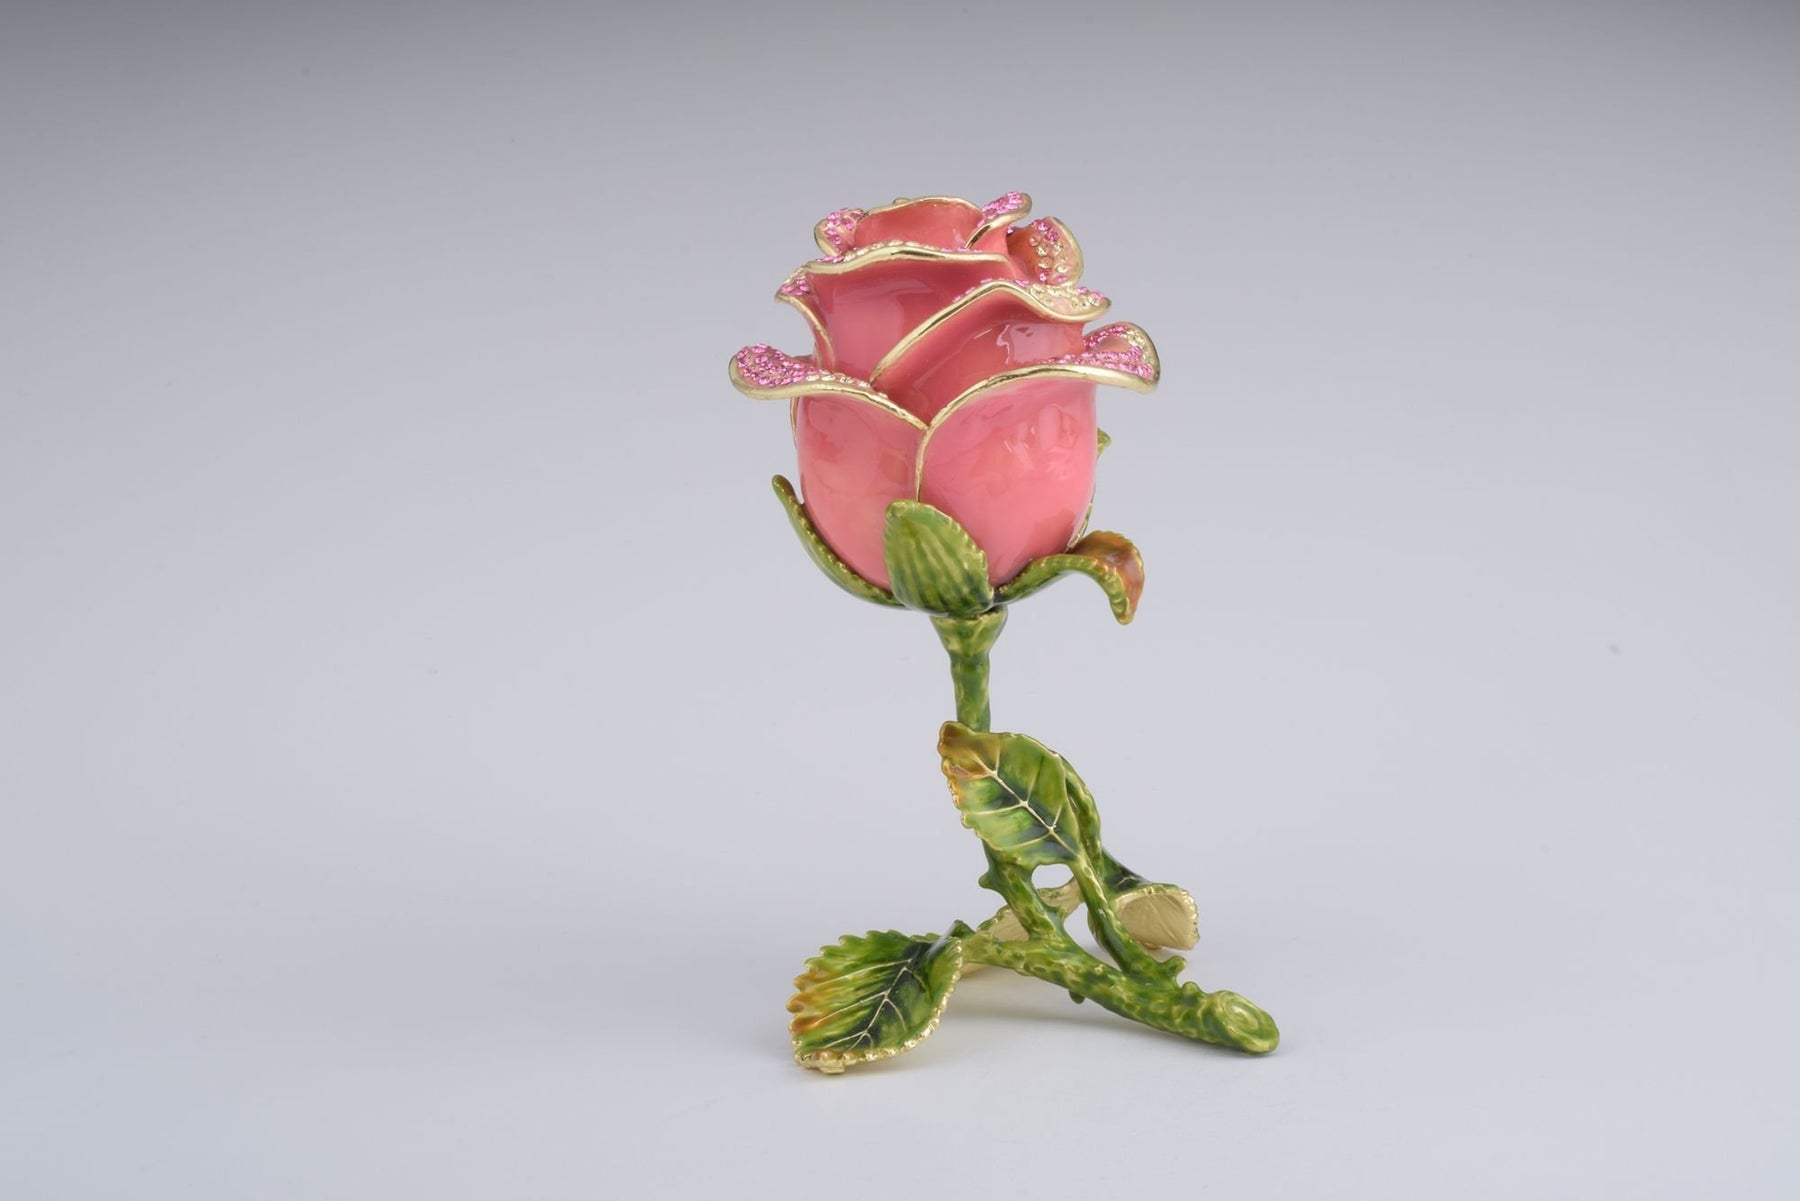 Keren Kopal Valentine Pink Rose  106.50